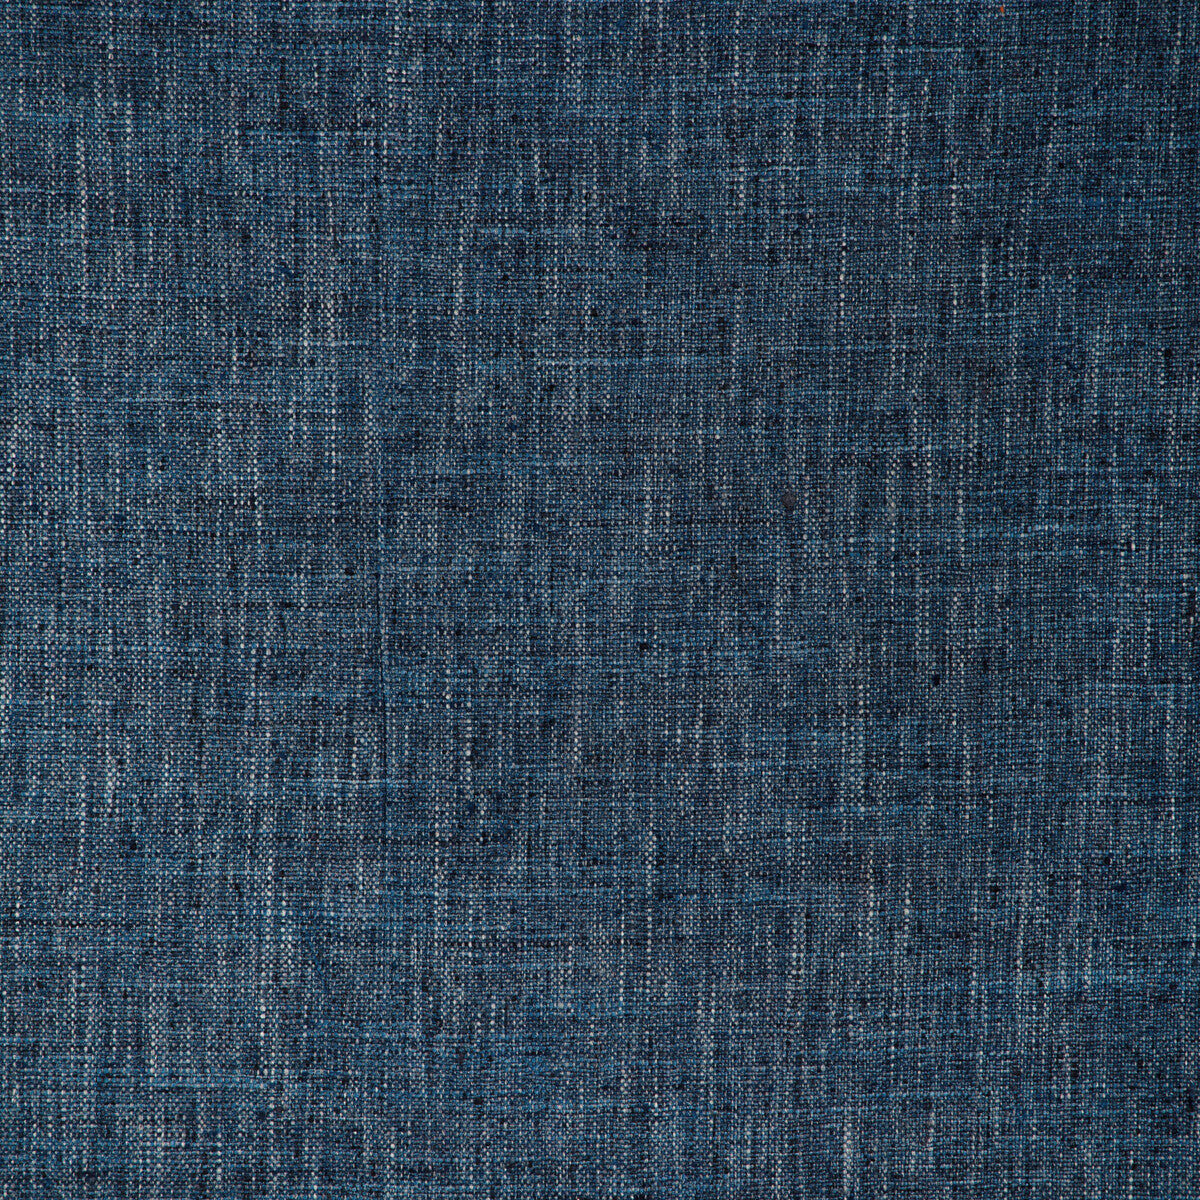 Kravet Smart fabric in 34083-550 color - pattern 34083.550.0 - by Kravet Smart